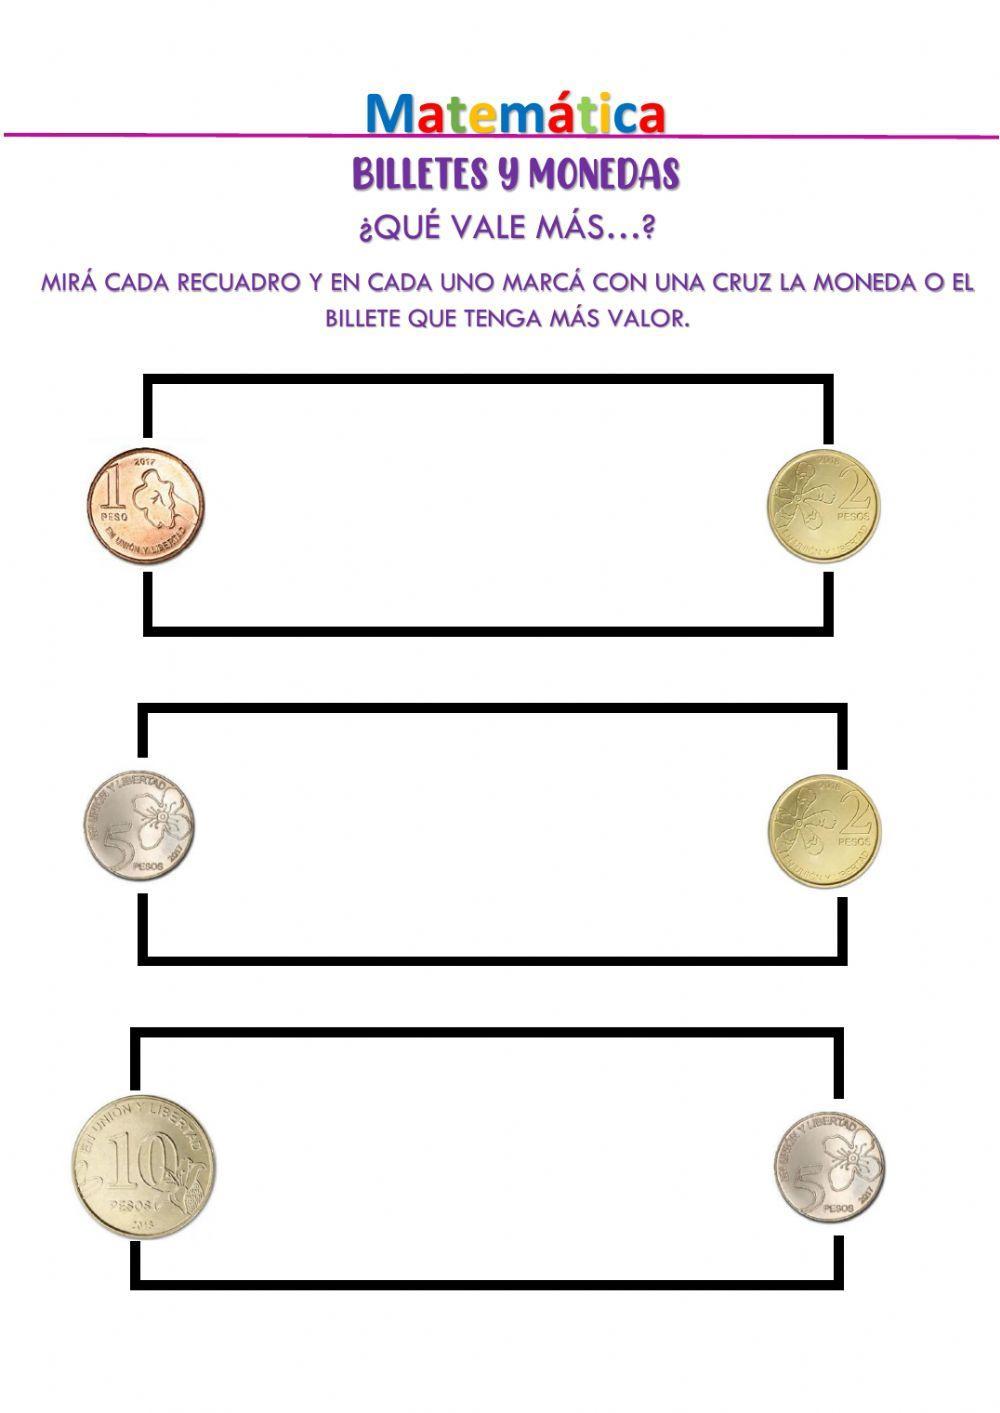 Sistema monetario argentino